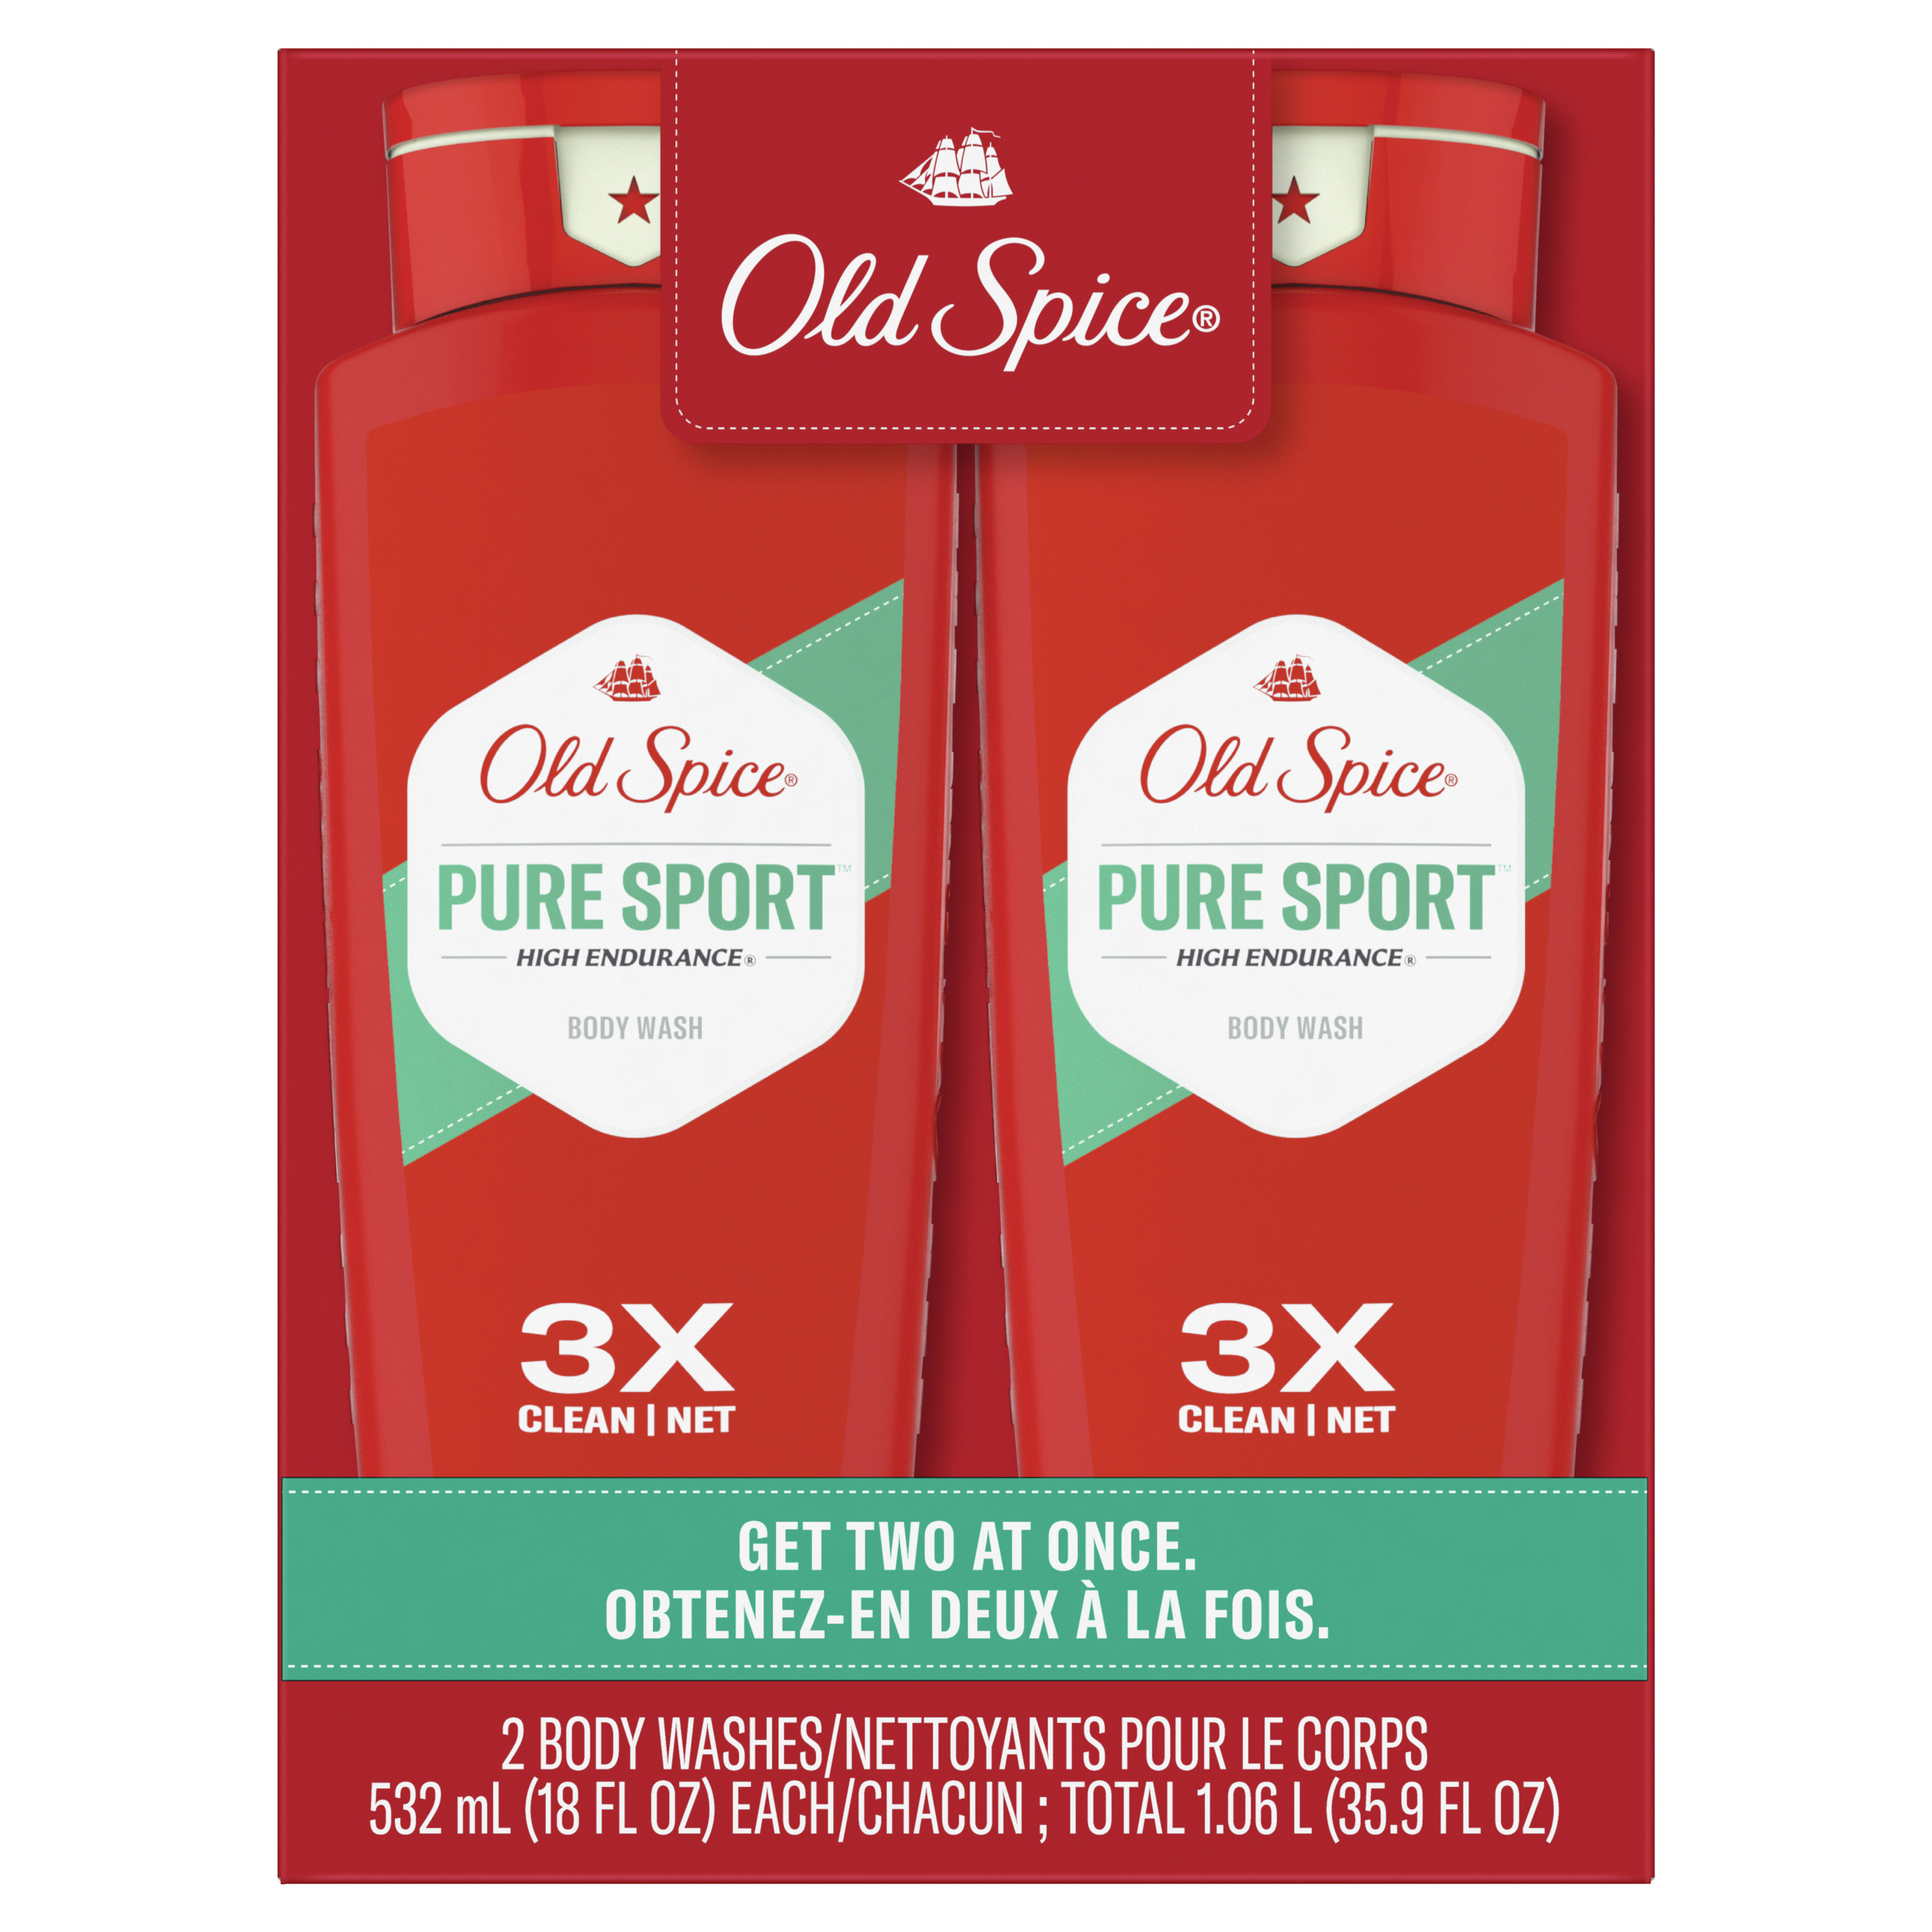 Old Spice High Endurance Body Wash for Men, Pure Sport Scent, 18 fl oz, 2 Pack - image 2 of 9